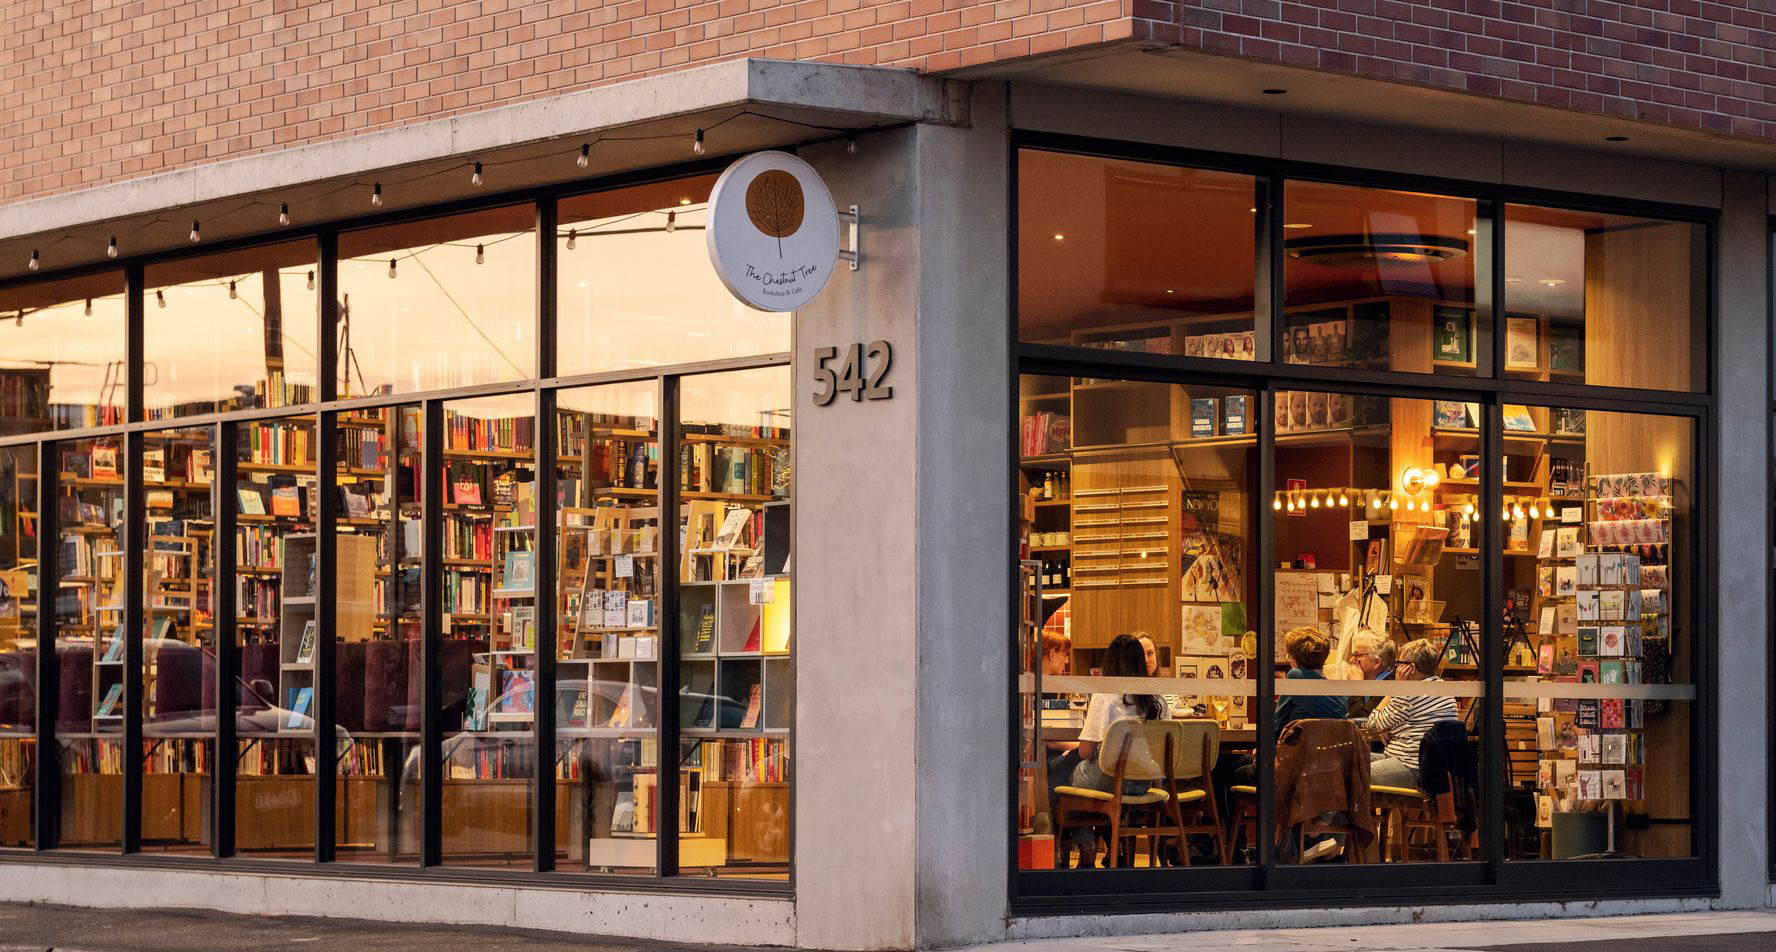 The Chestnut Tree Bookshop – a profile